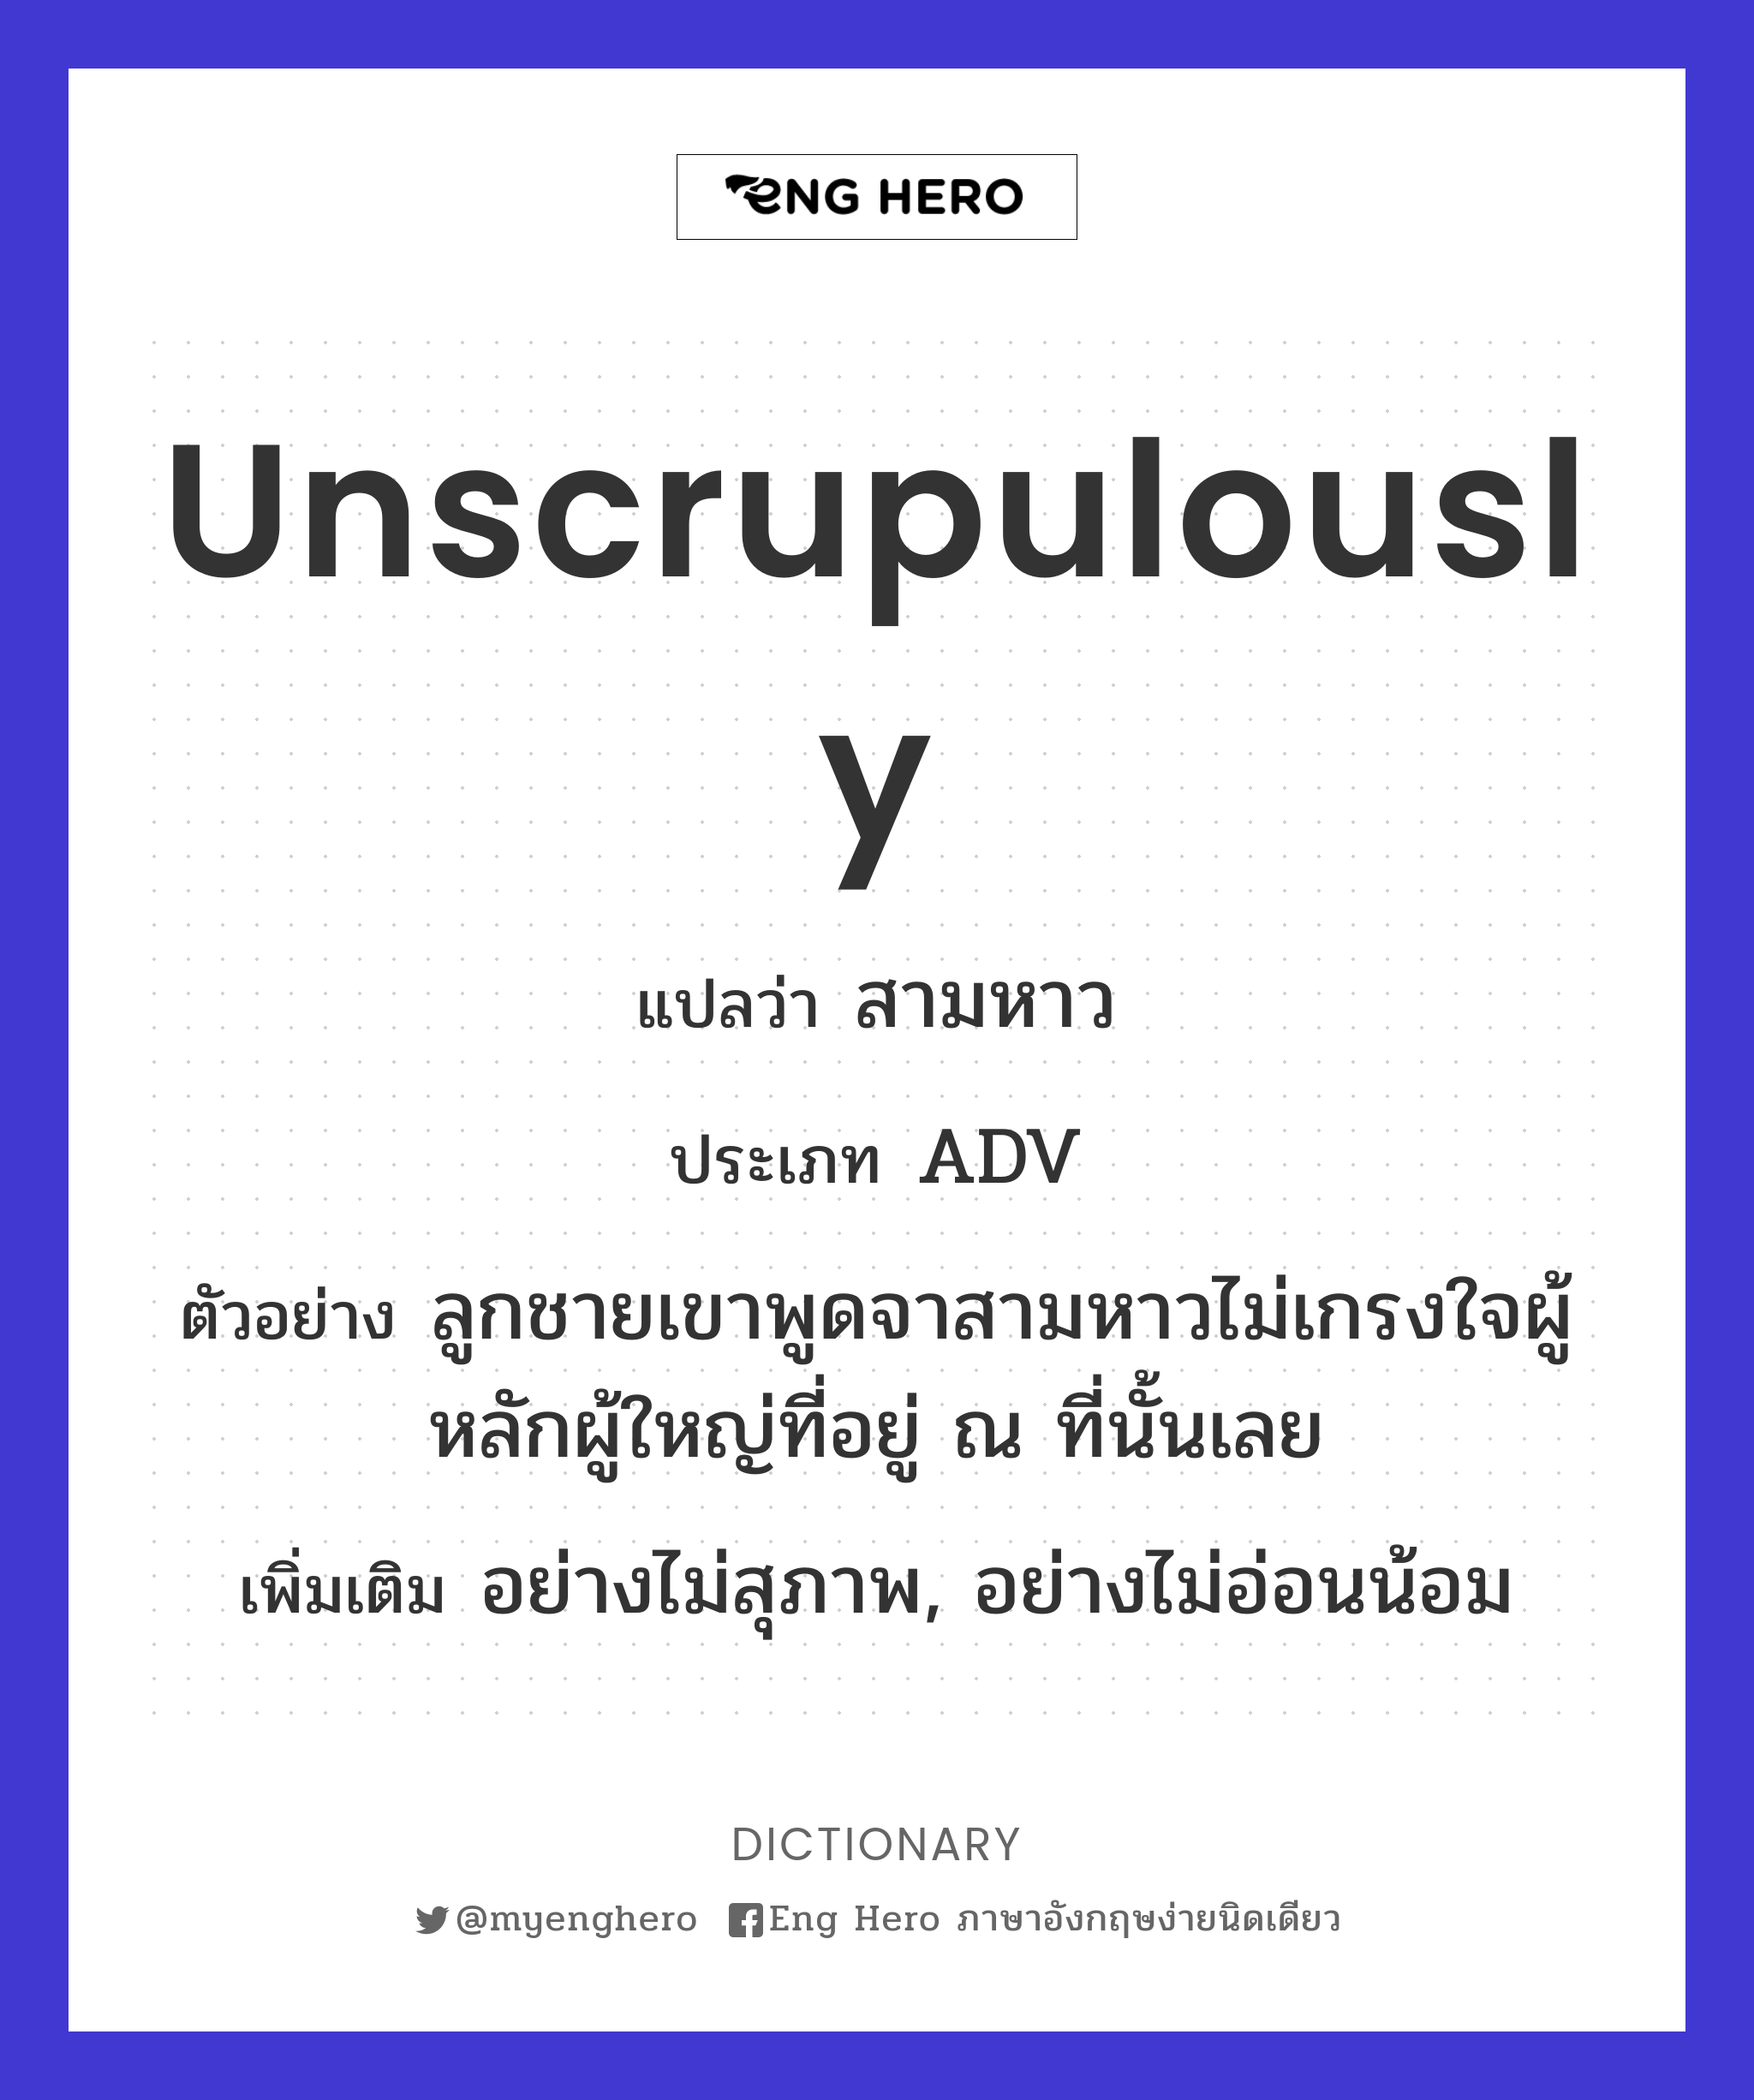 unscrupulously